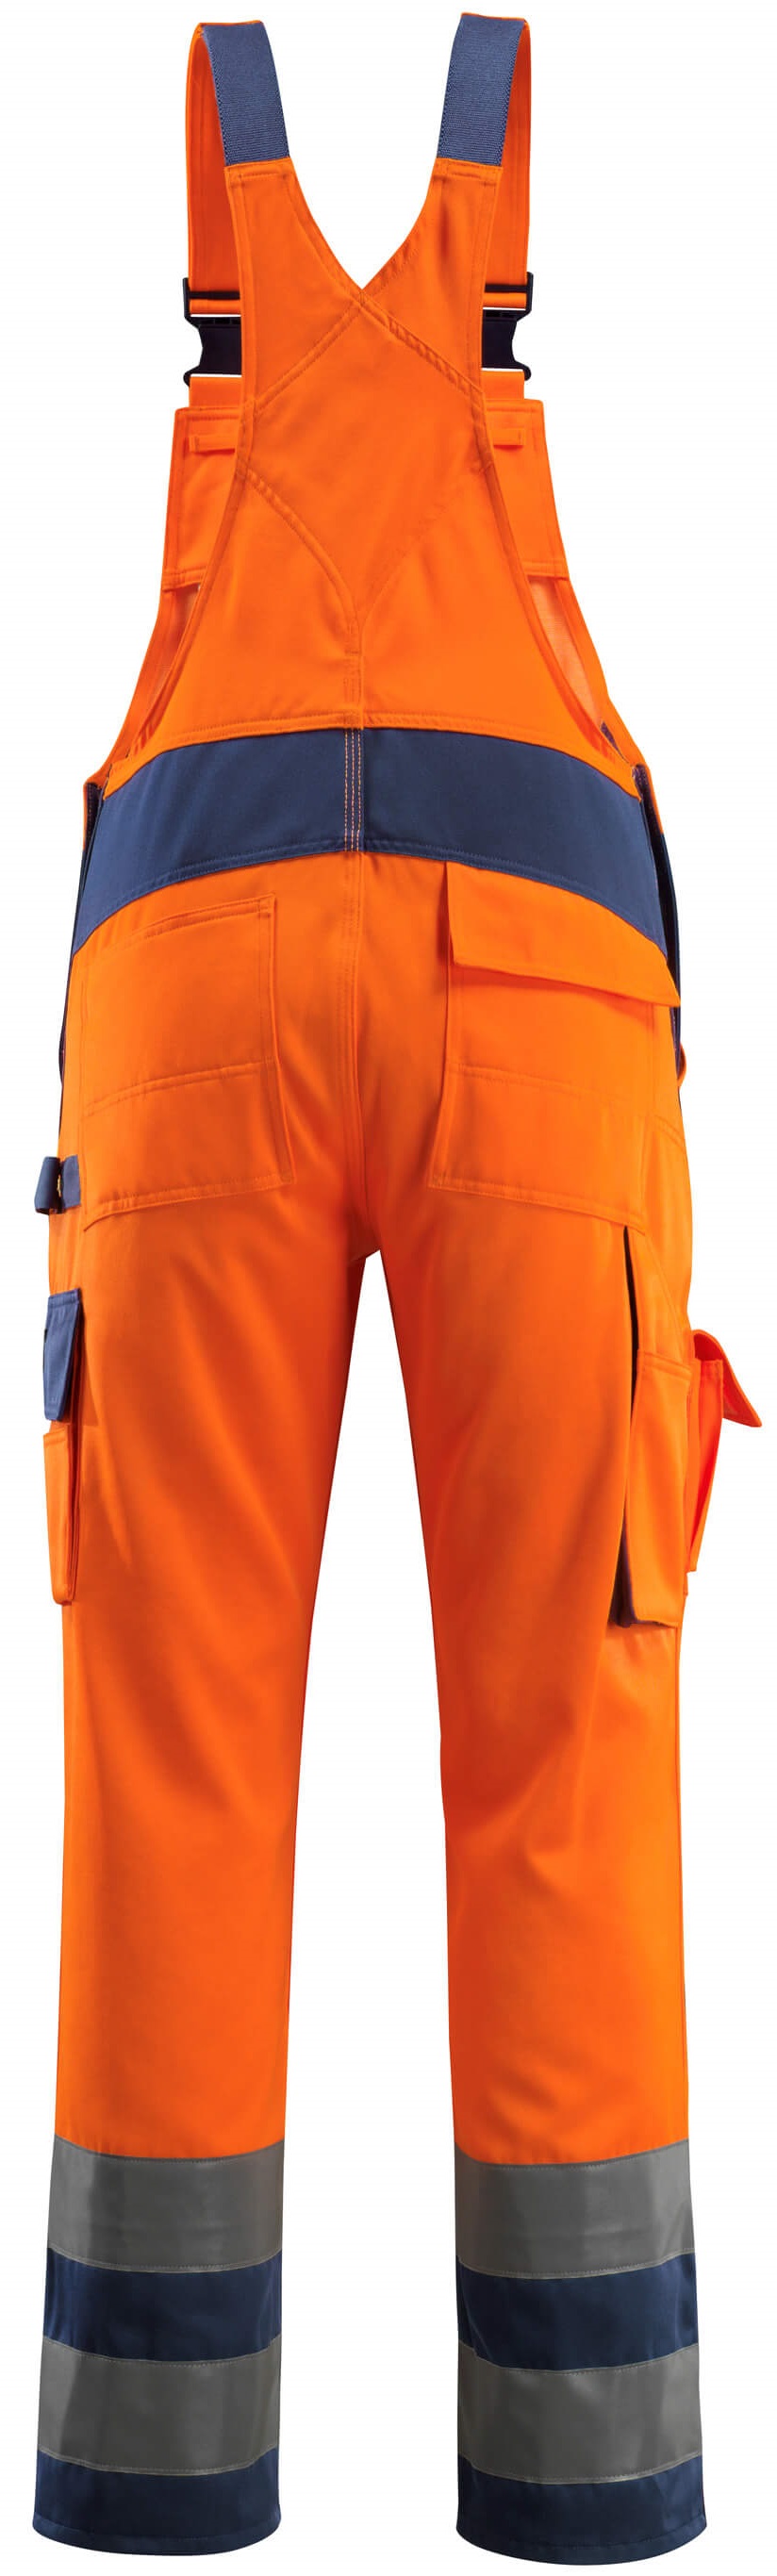 MASCOT-Warnschutz, Warn-Latzhose, Barras, 90 cm, 290 g/m², orange/marine
